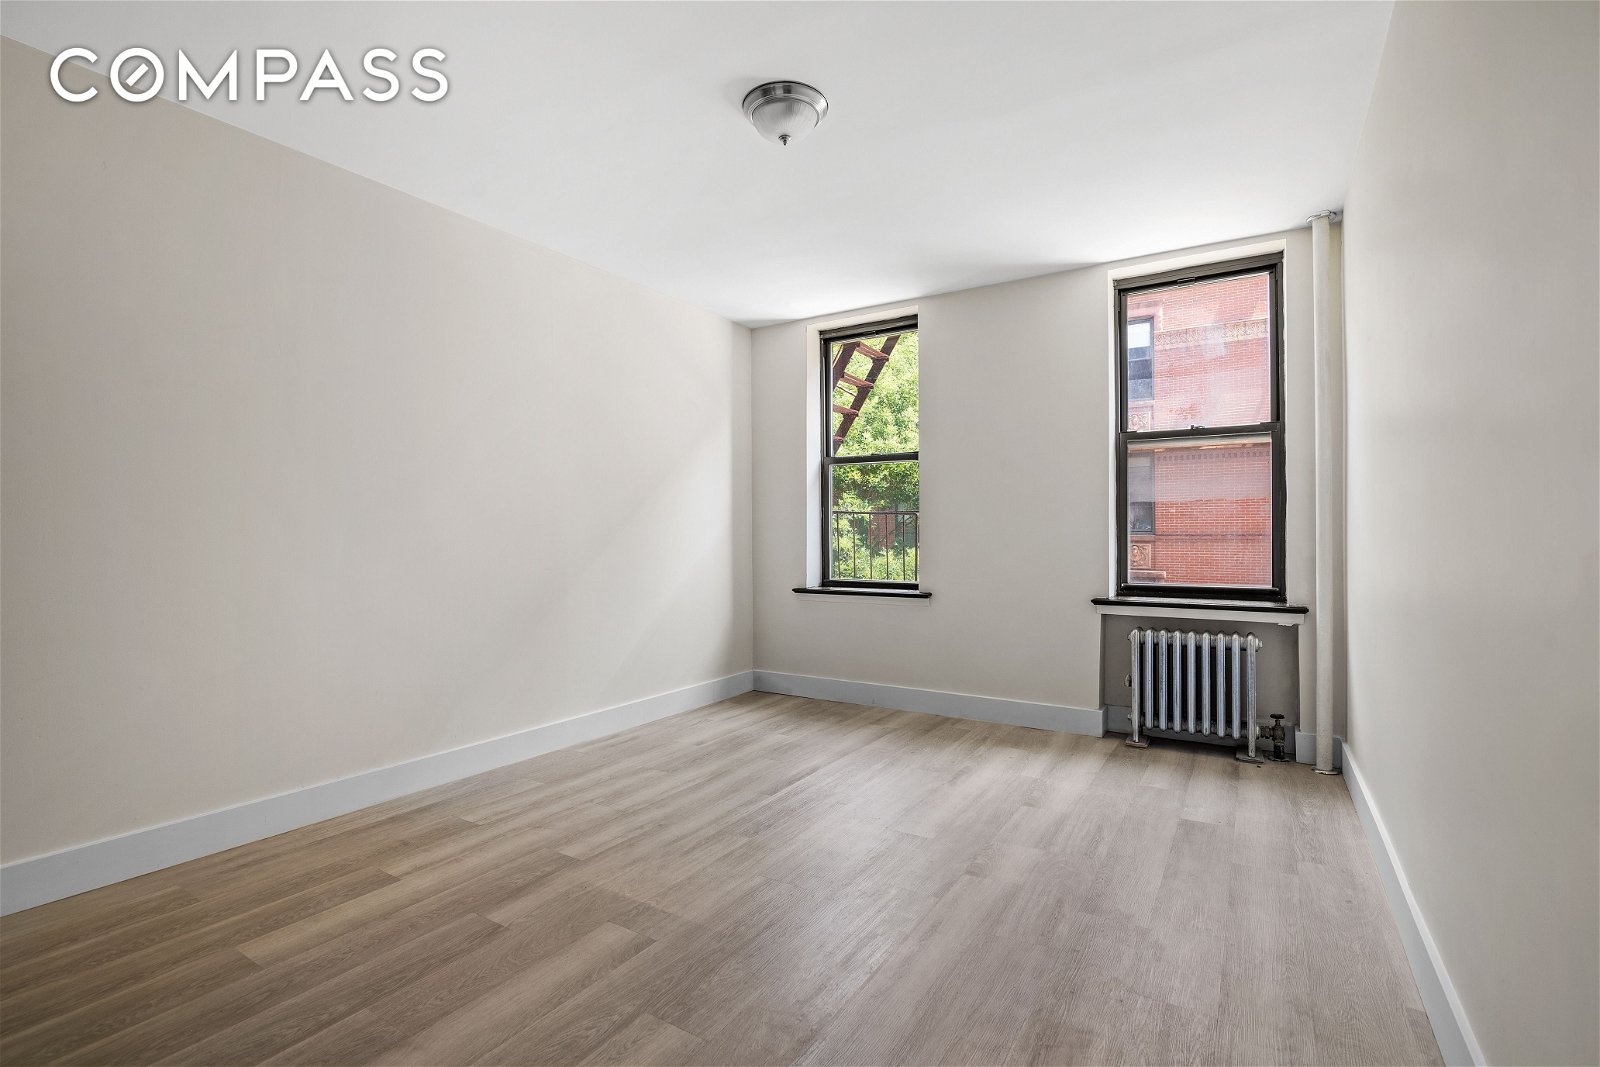 Real estate property located at 131 Eldridge #2-A, New York, New York City, NY